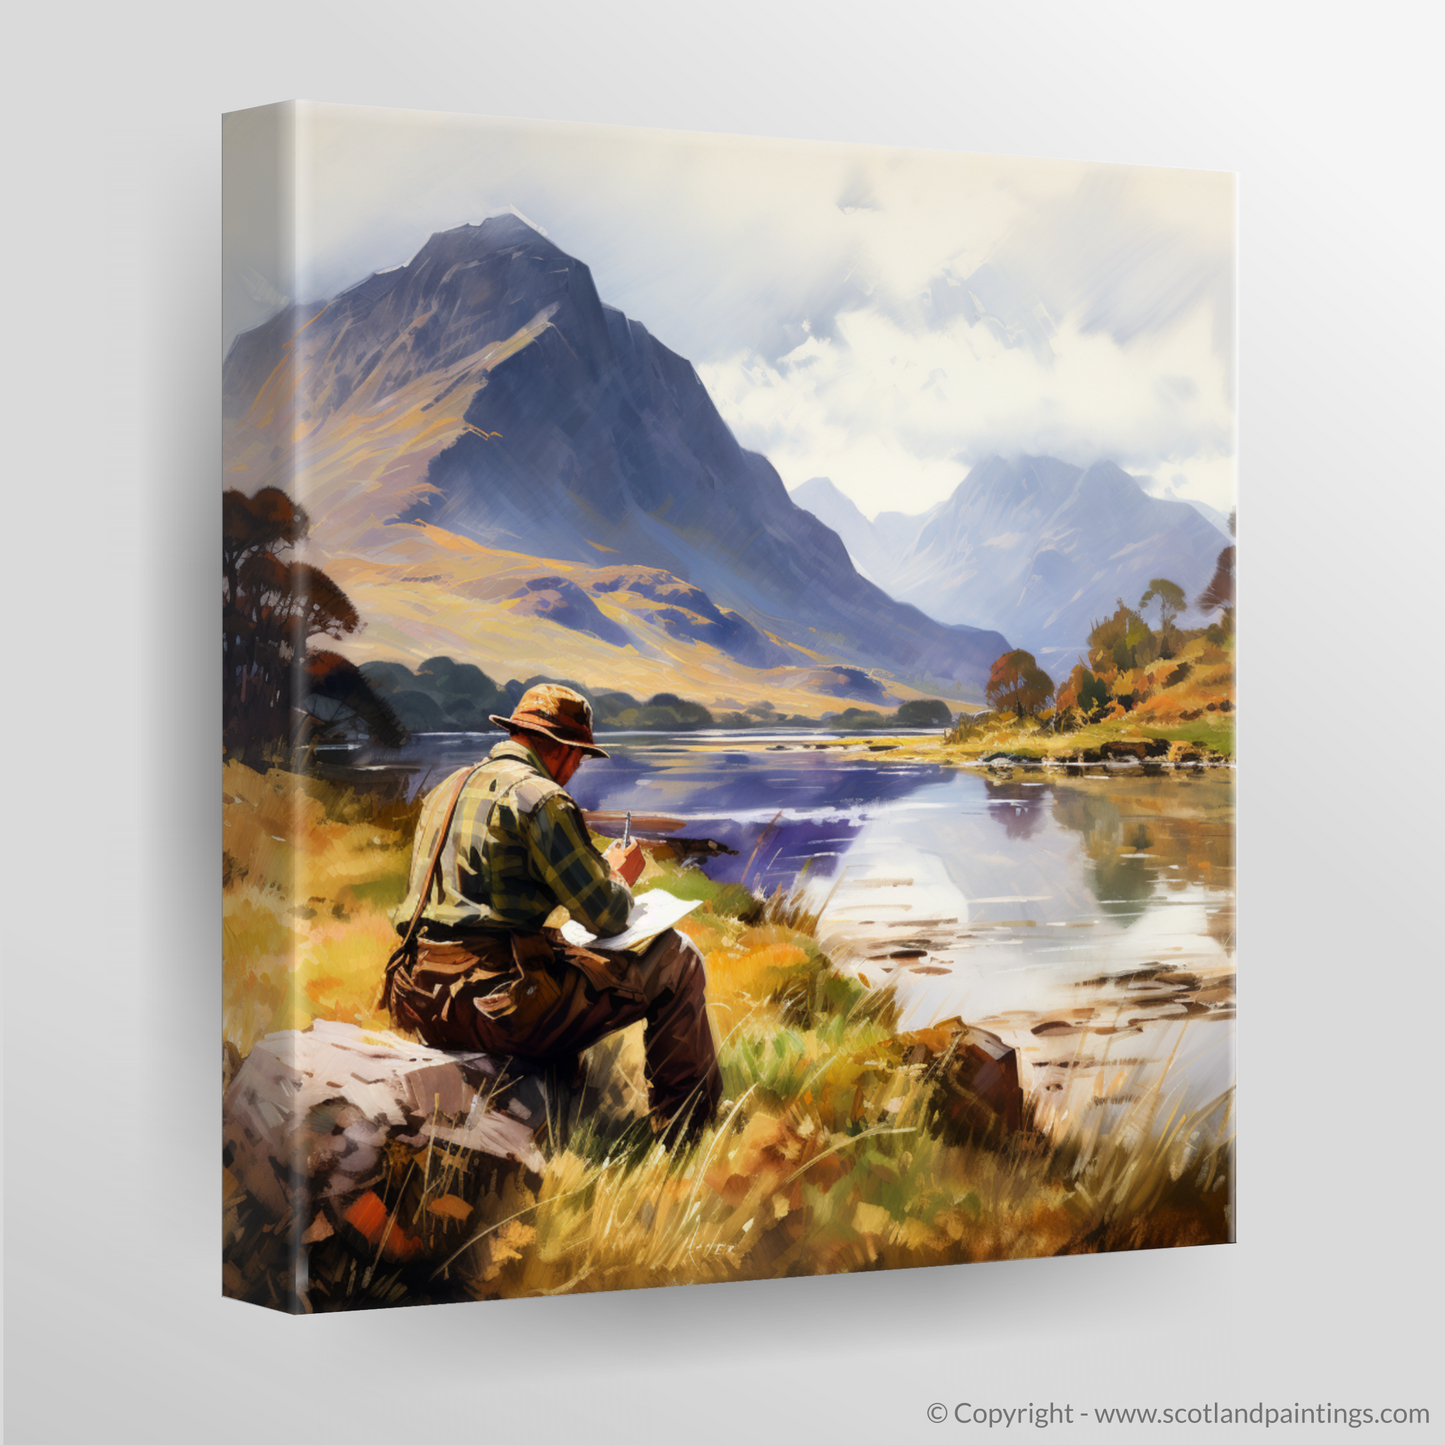 Highland Reverie: A Sketch of Glencoe's Grandeur